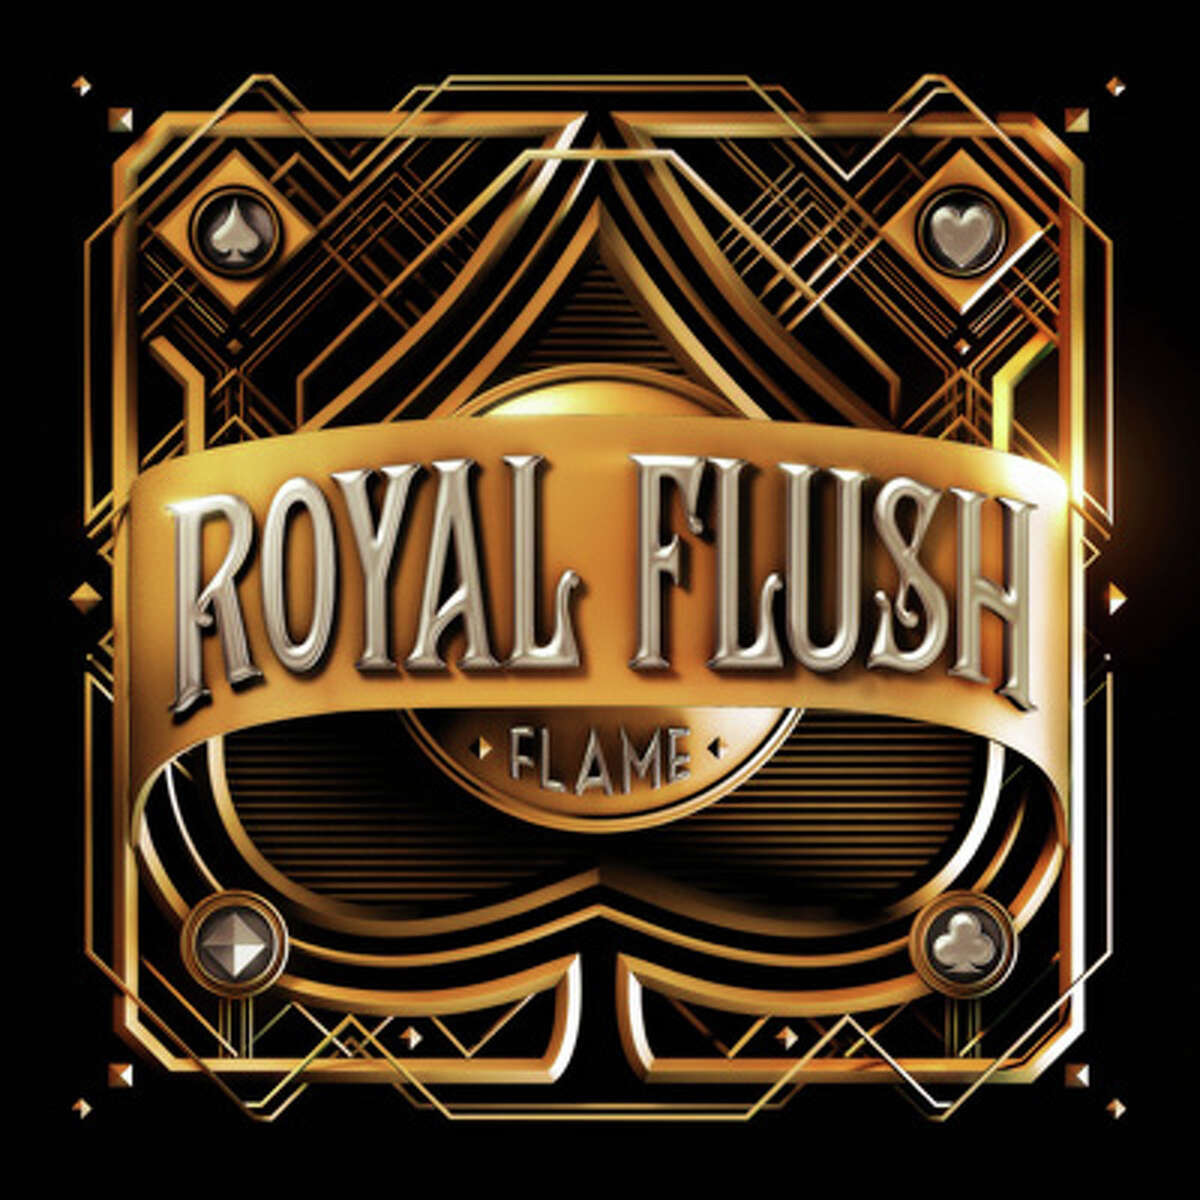 "Royal Flush" is Christian rapper Flame's seventh album.